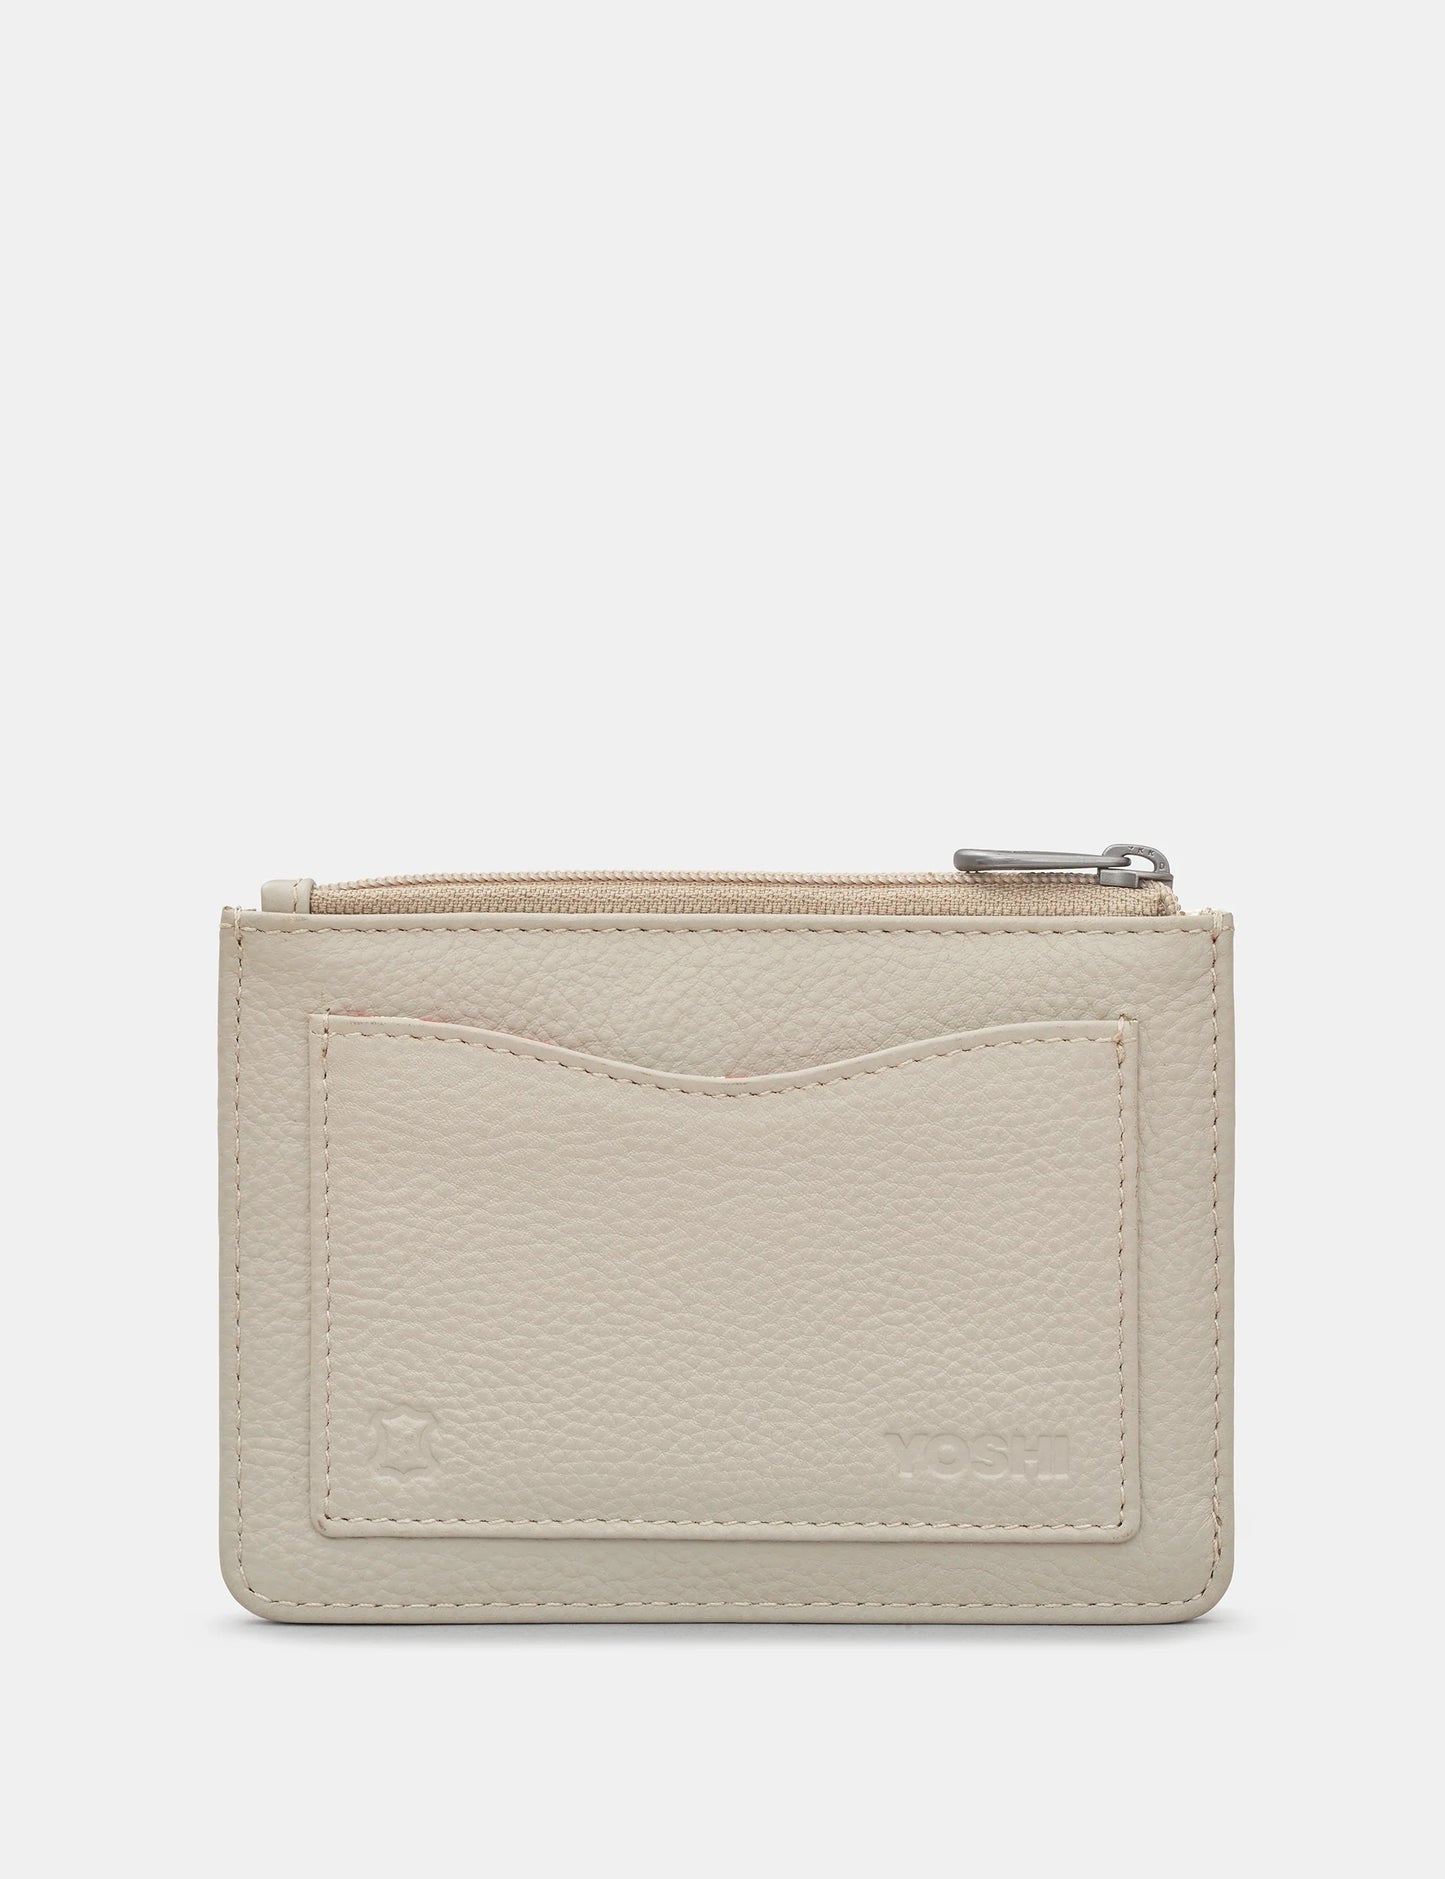 Yoshi Y1321 Country cottage zip top purse